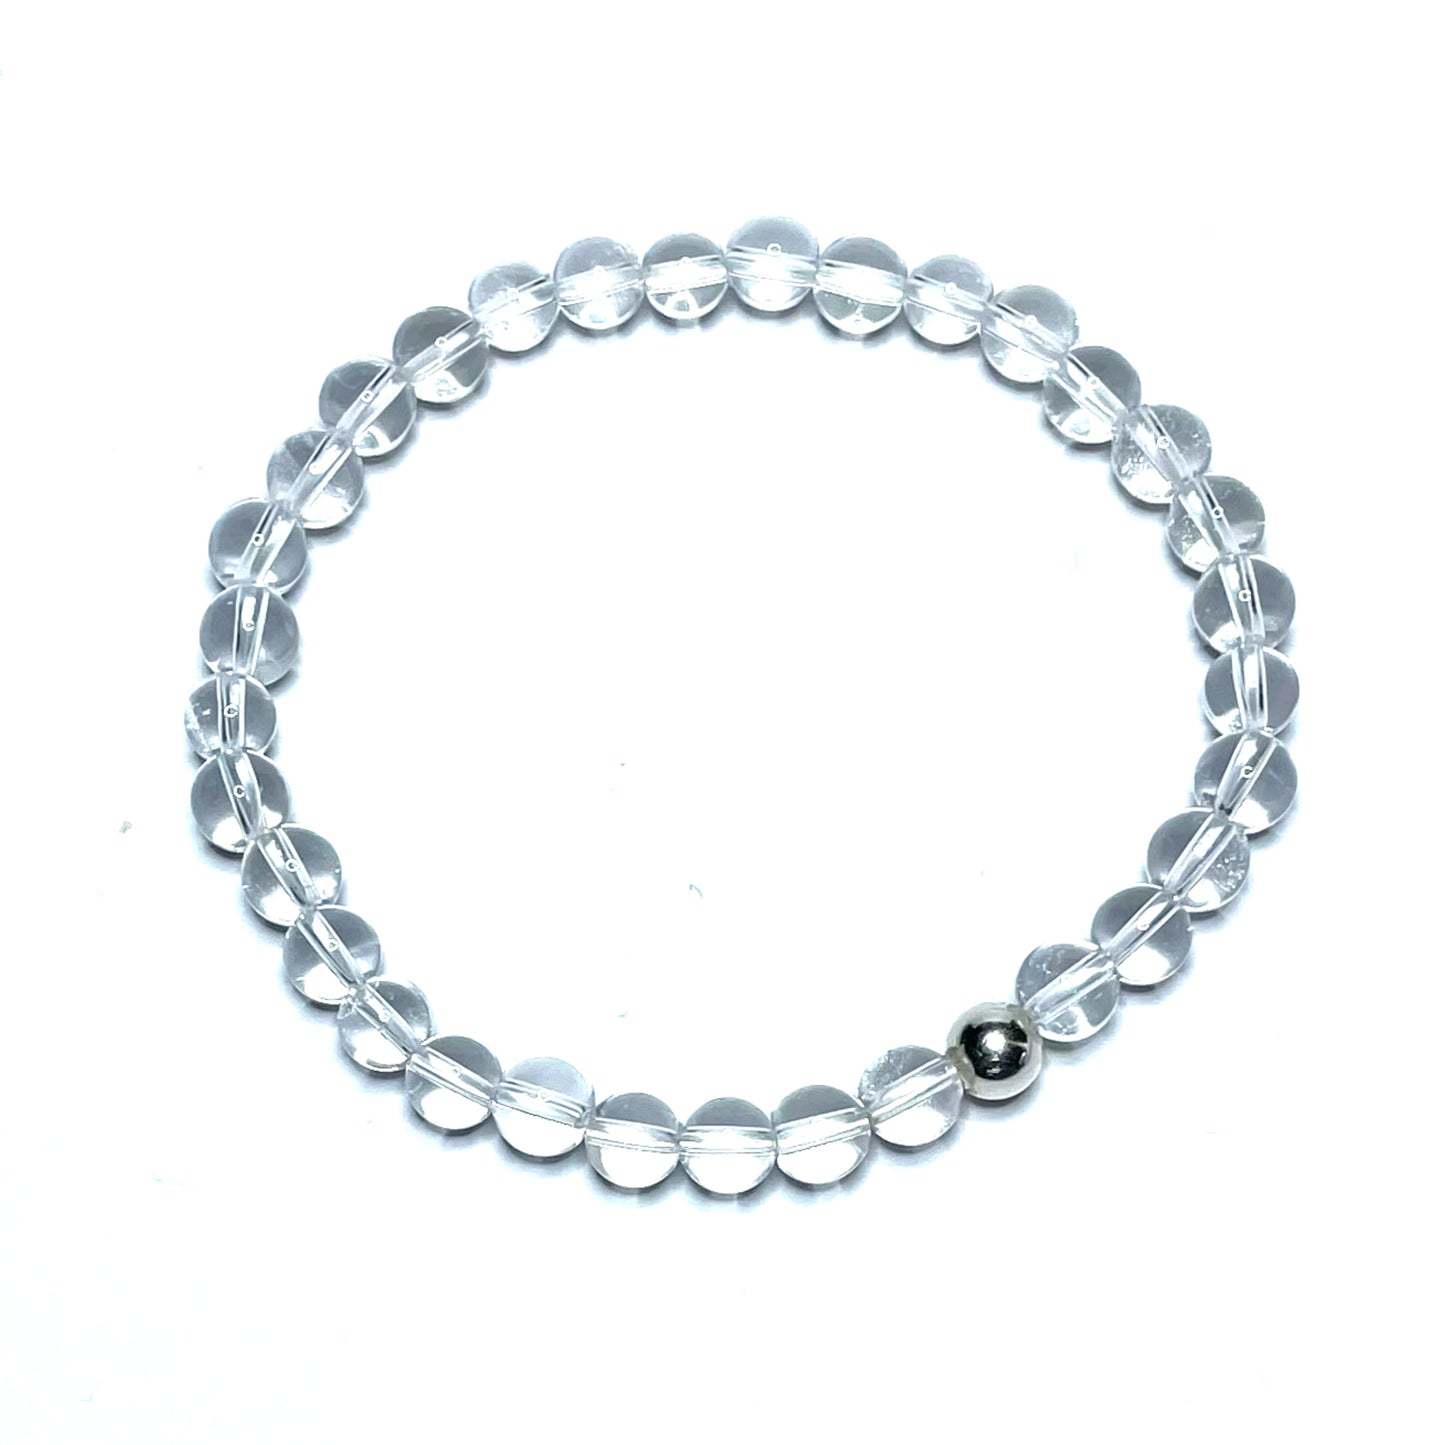 Crown chakra gemstone bracelet